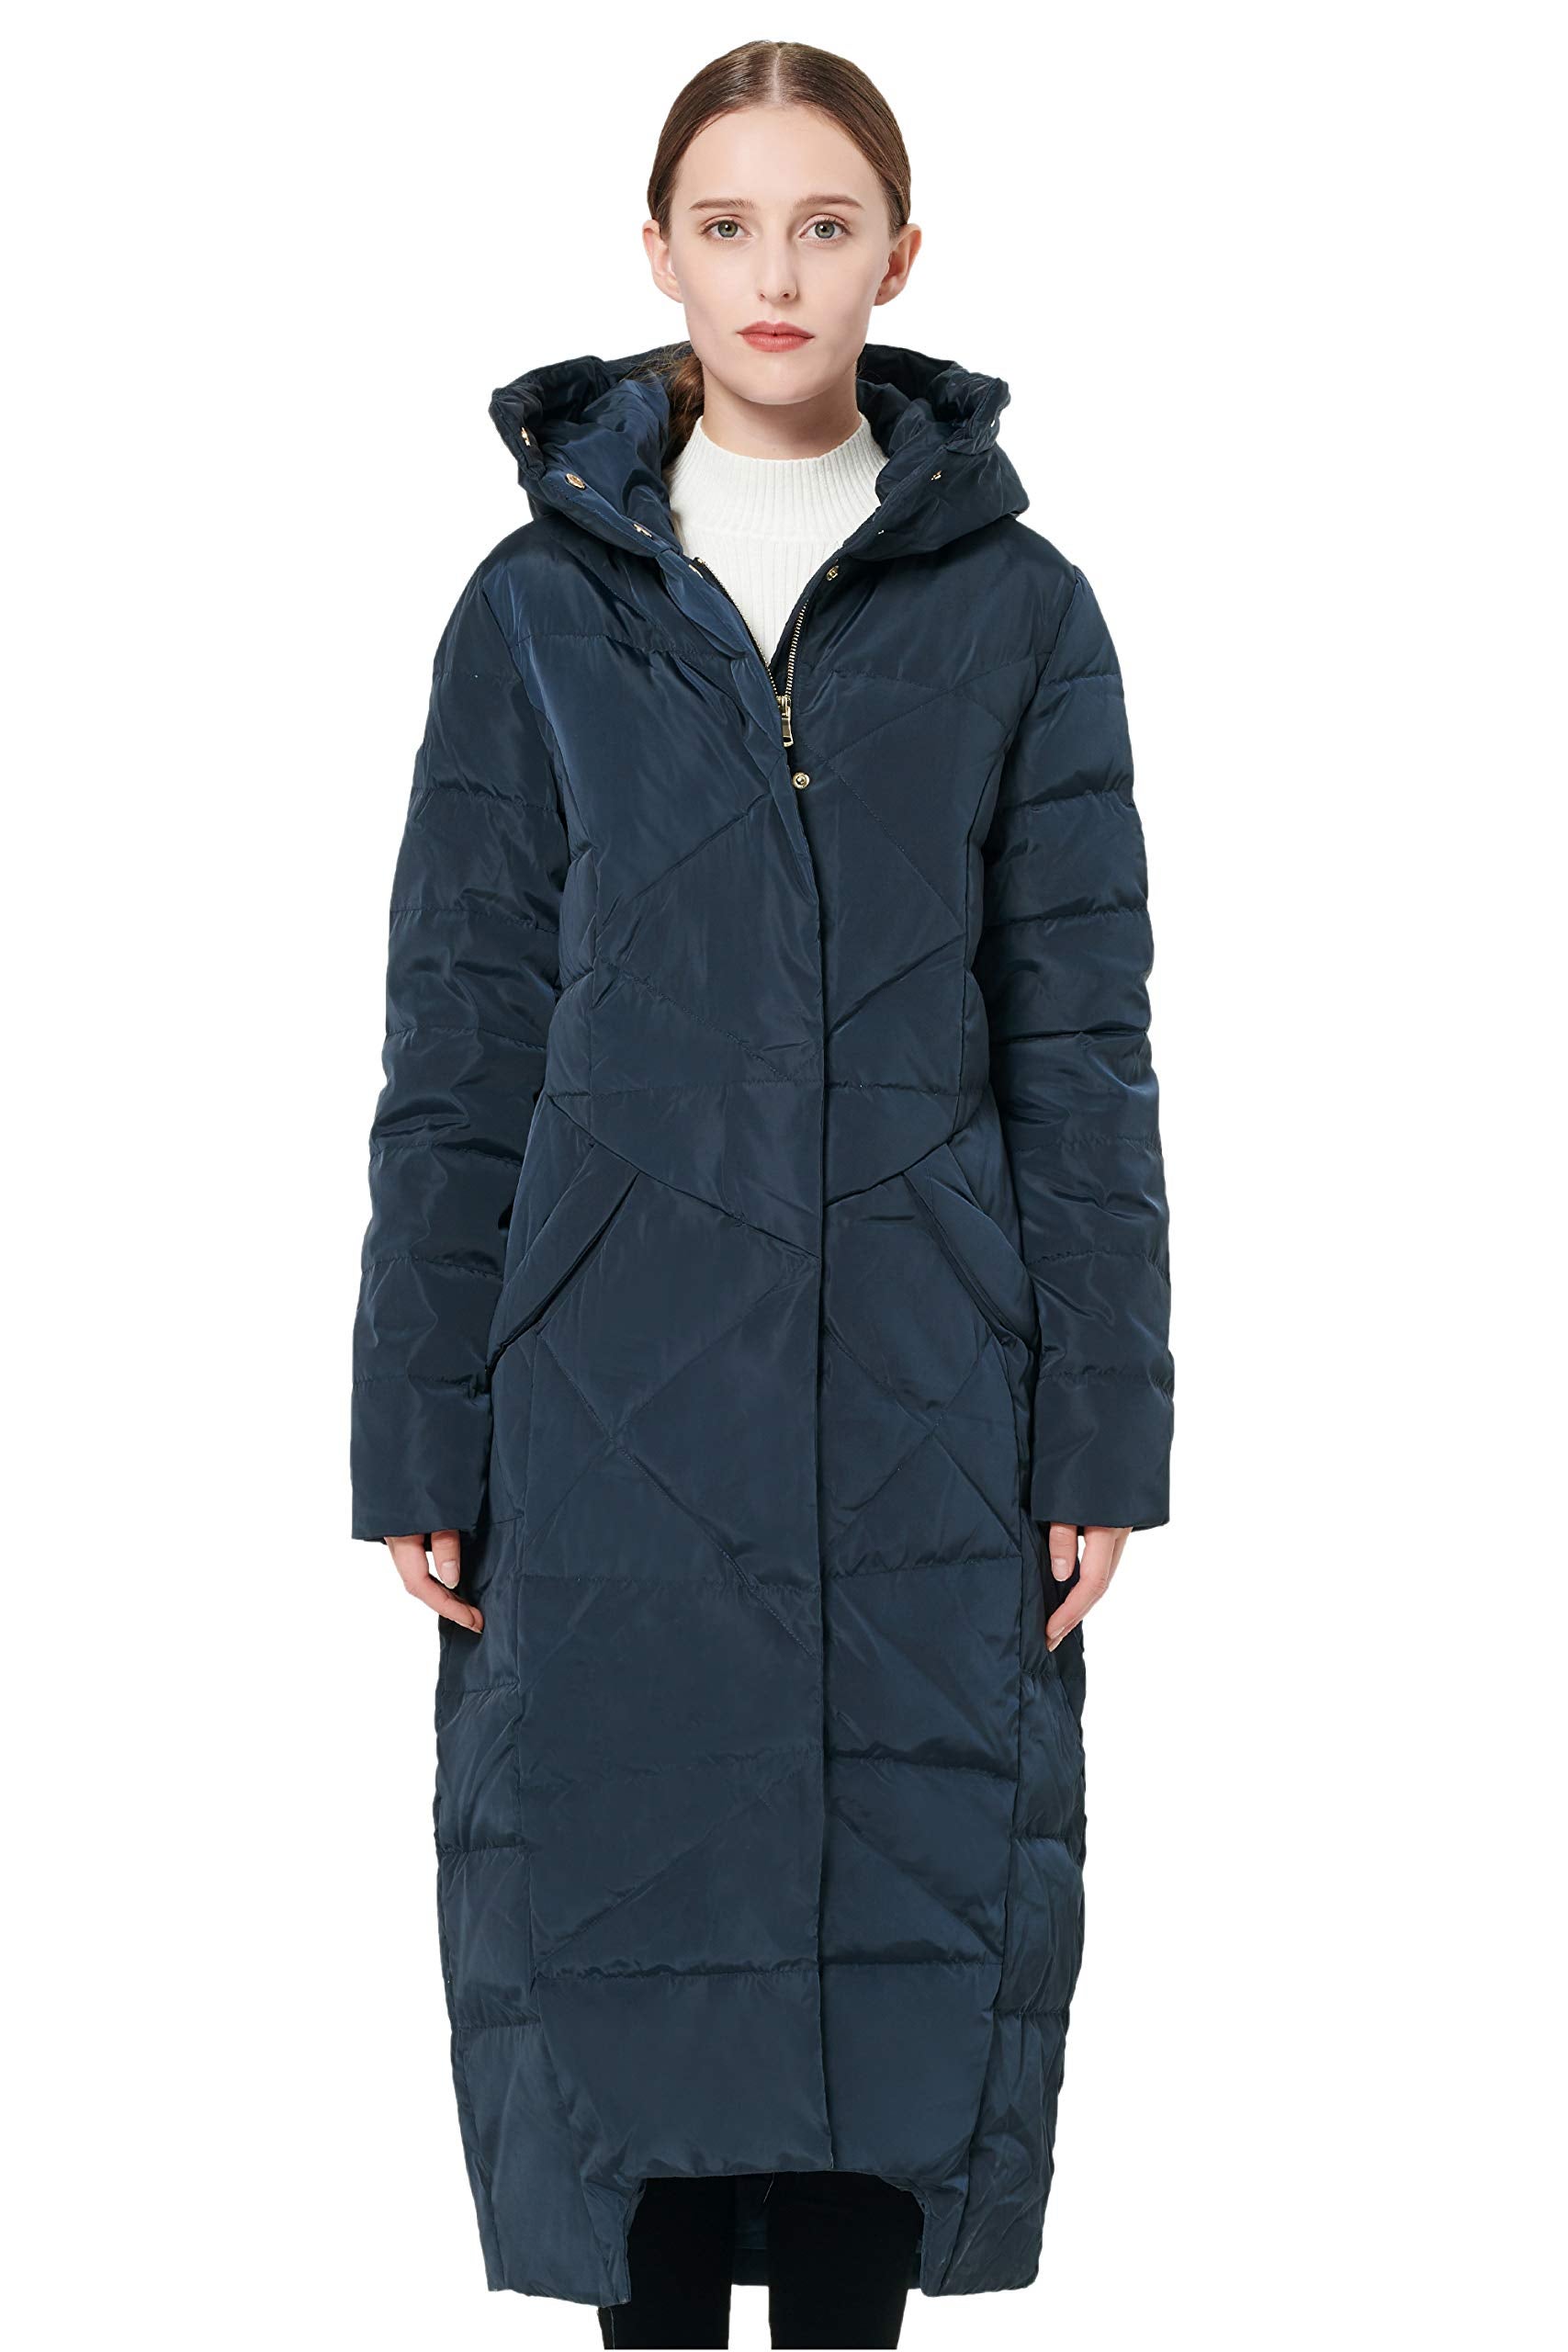 Orolay + Winter Maxi Jacket with Hood